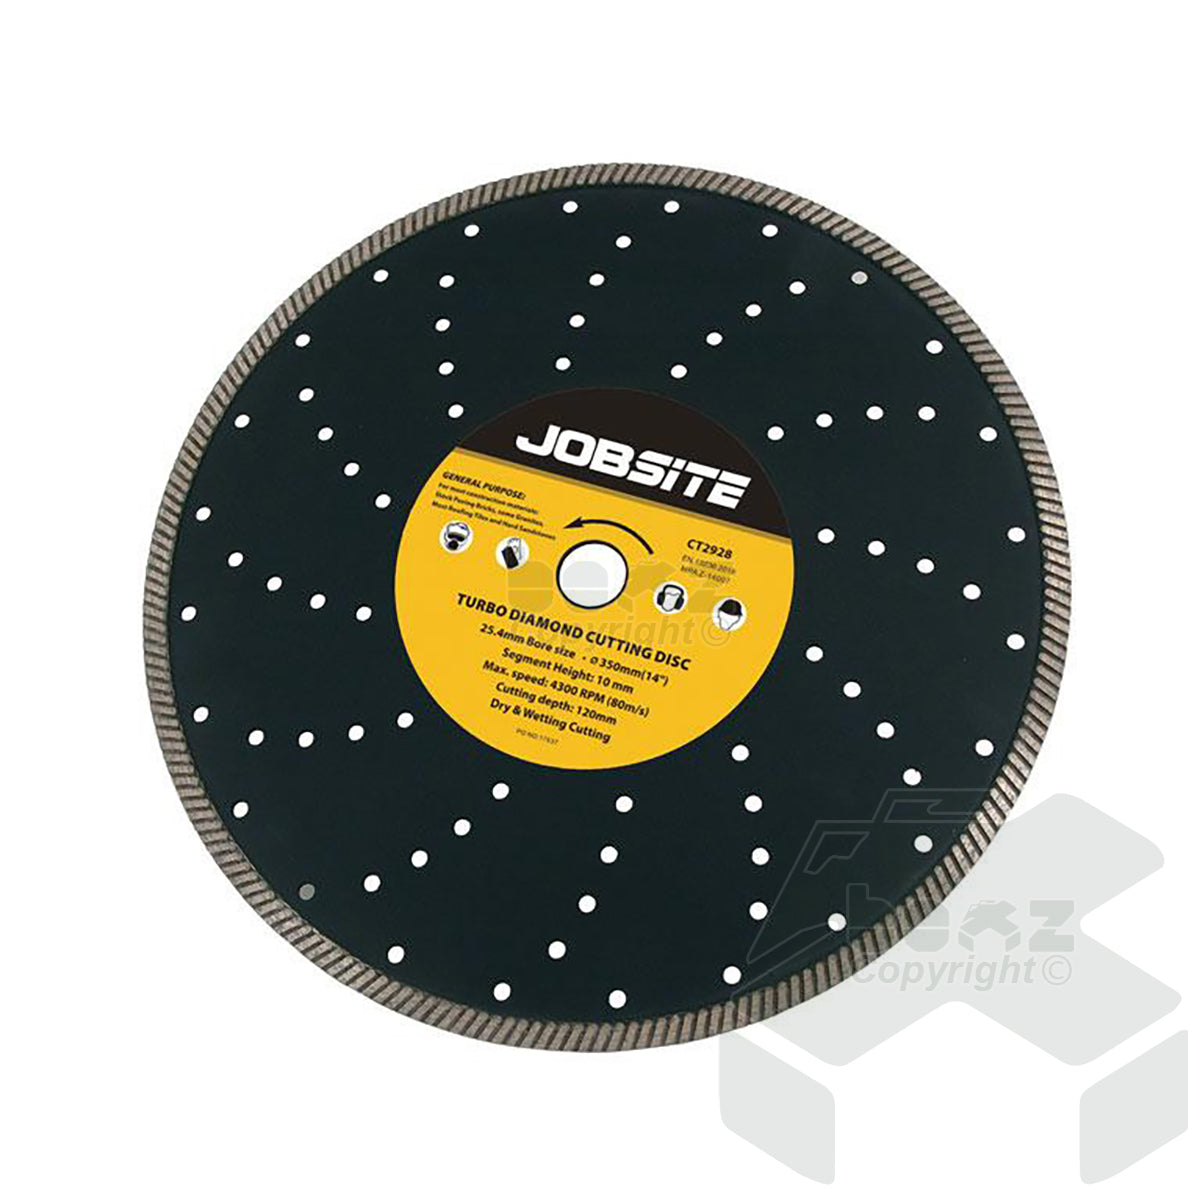 Jobsite Diamond Disc Trade Master 14 Inch Turbo